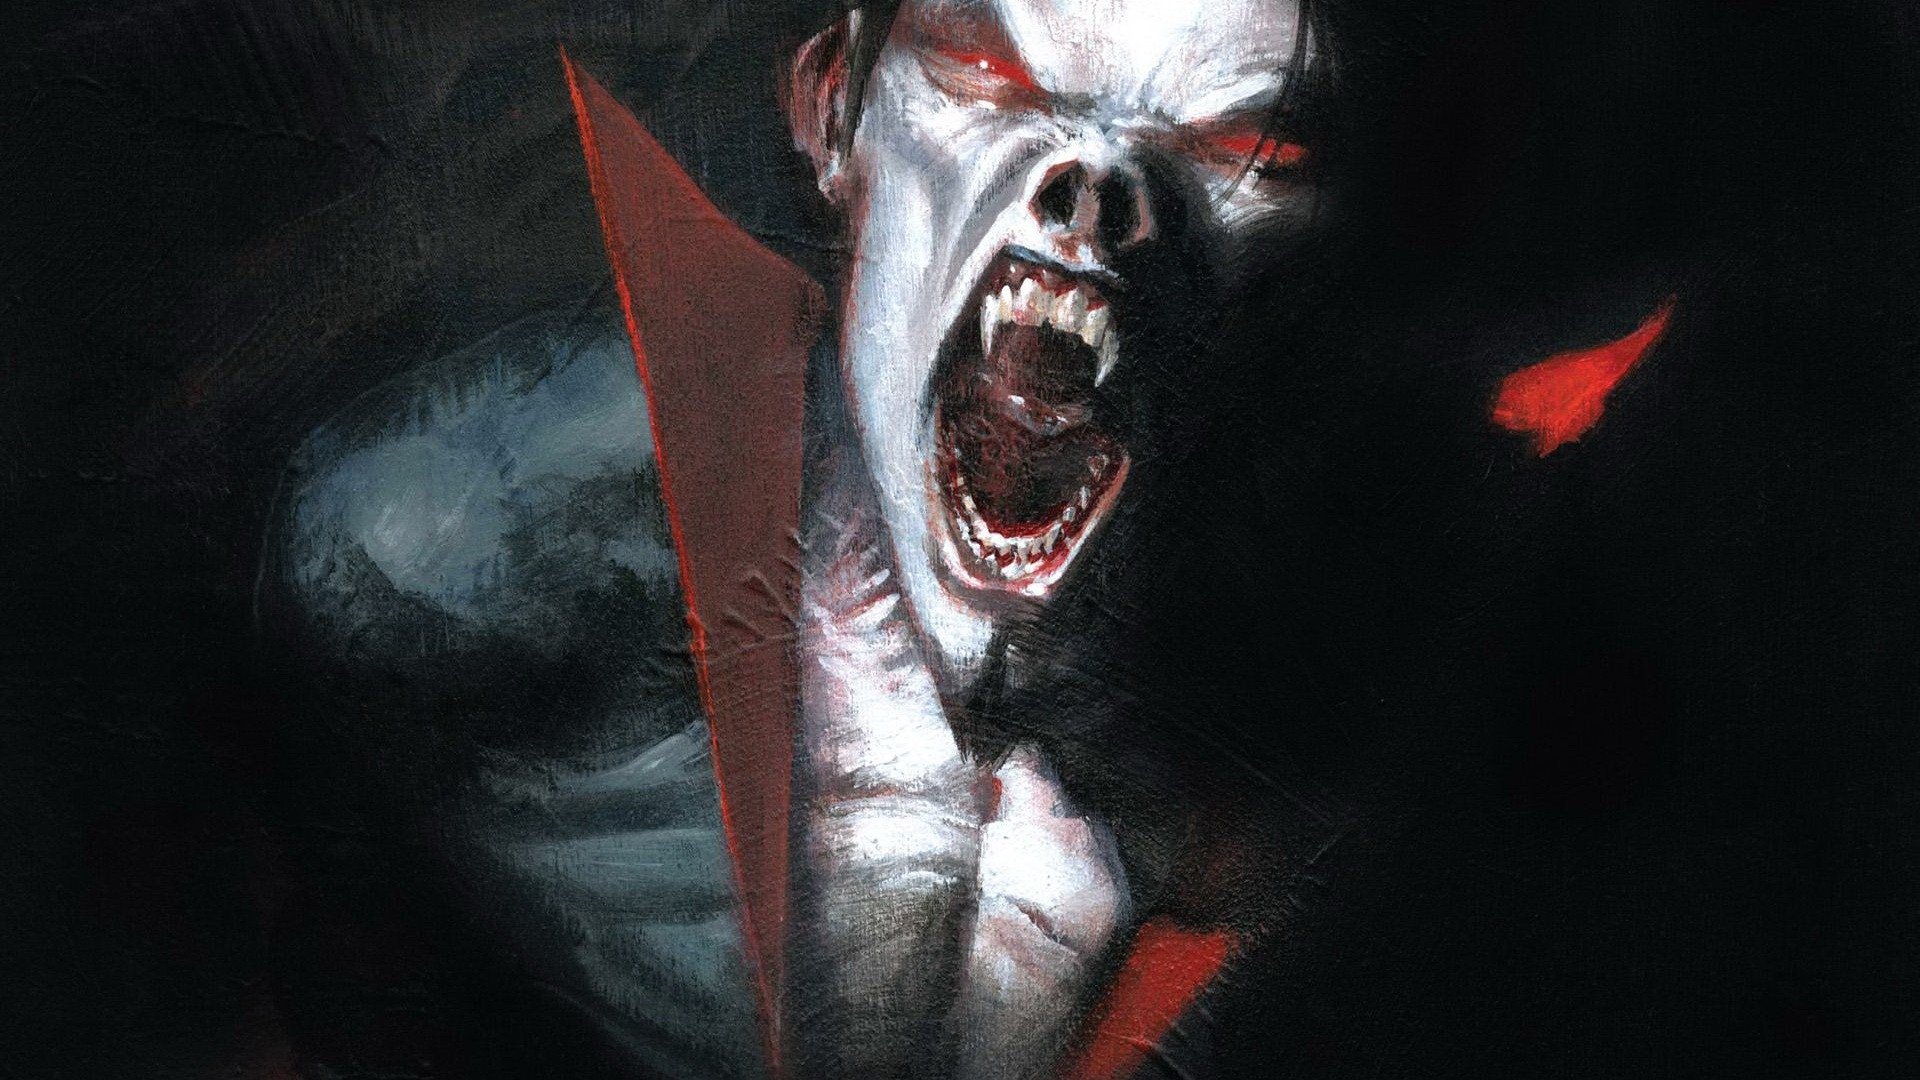 Morbius Art Wallpapers